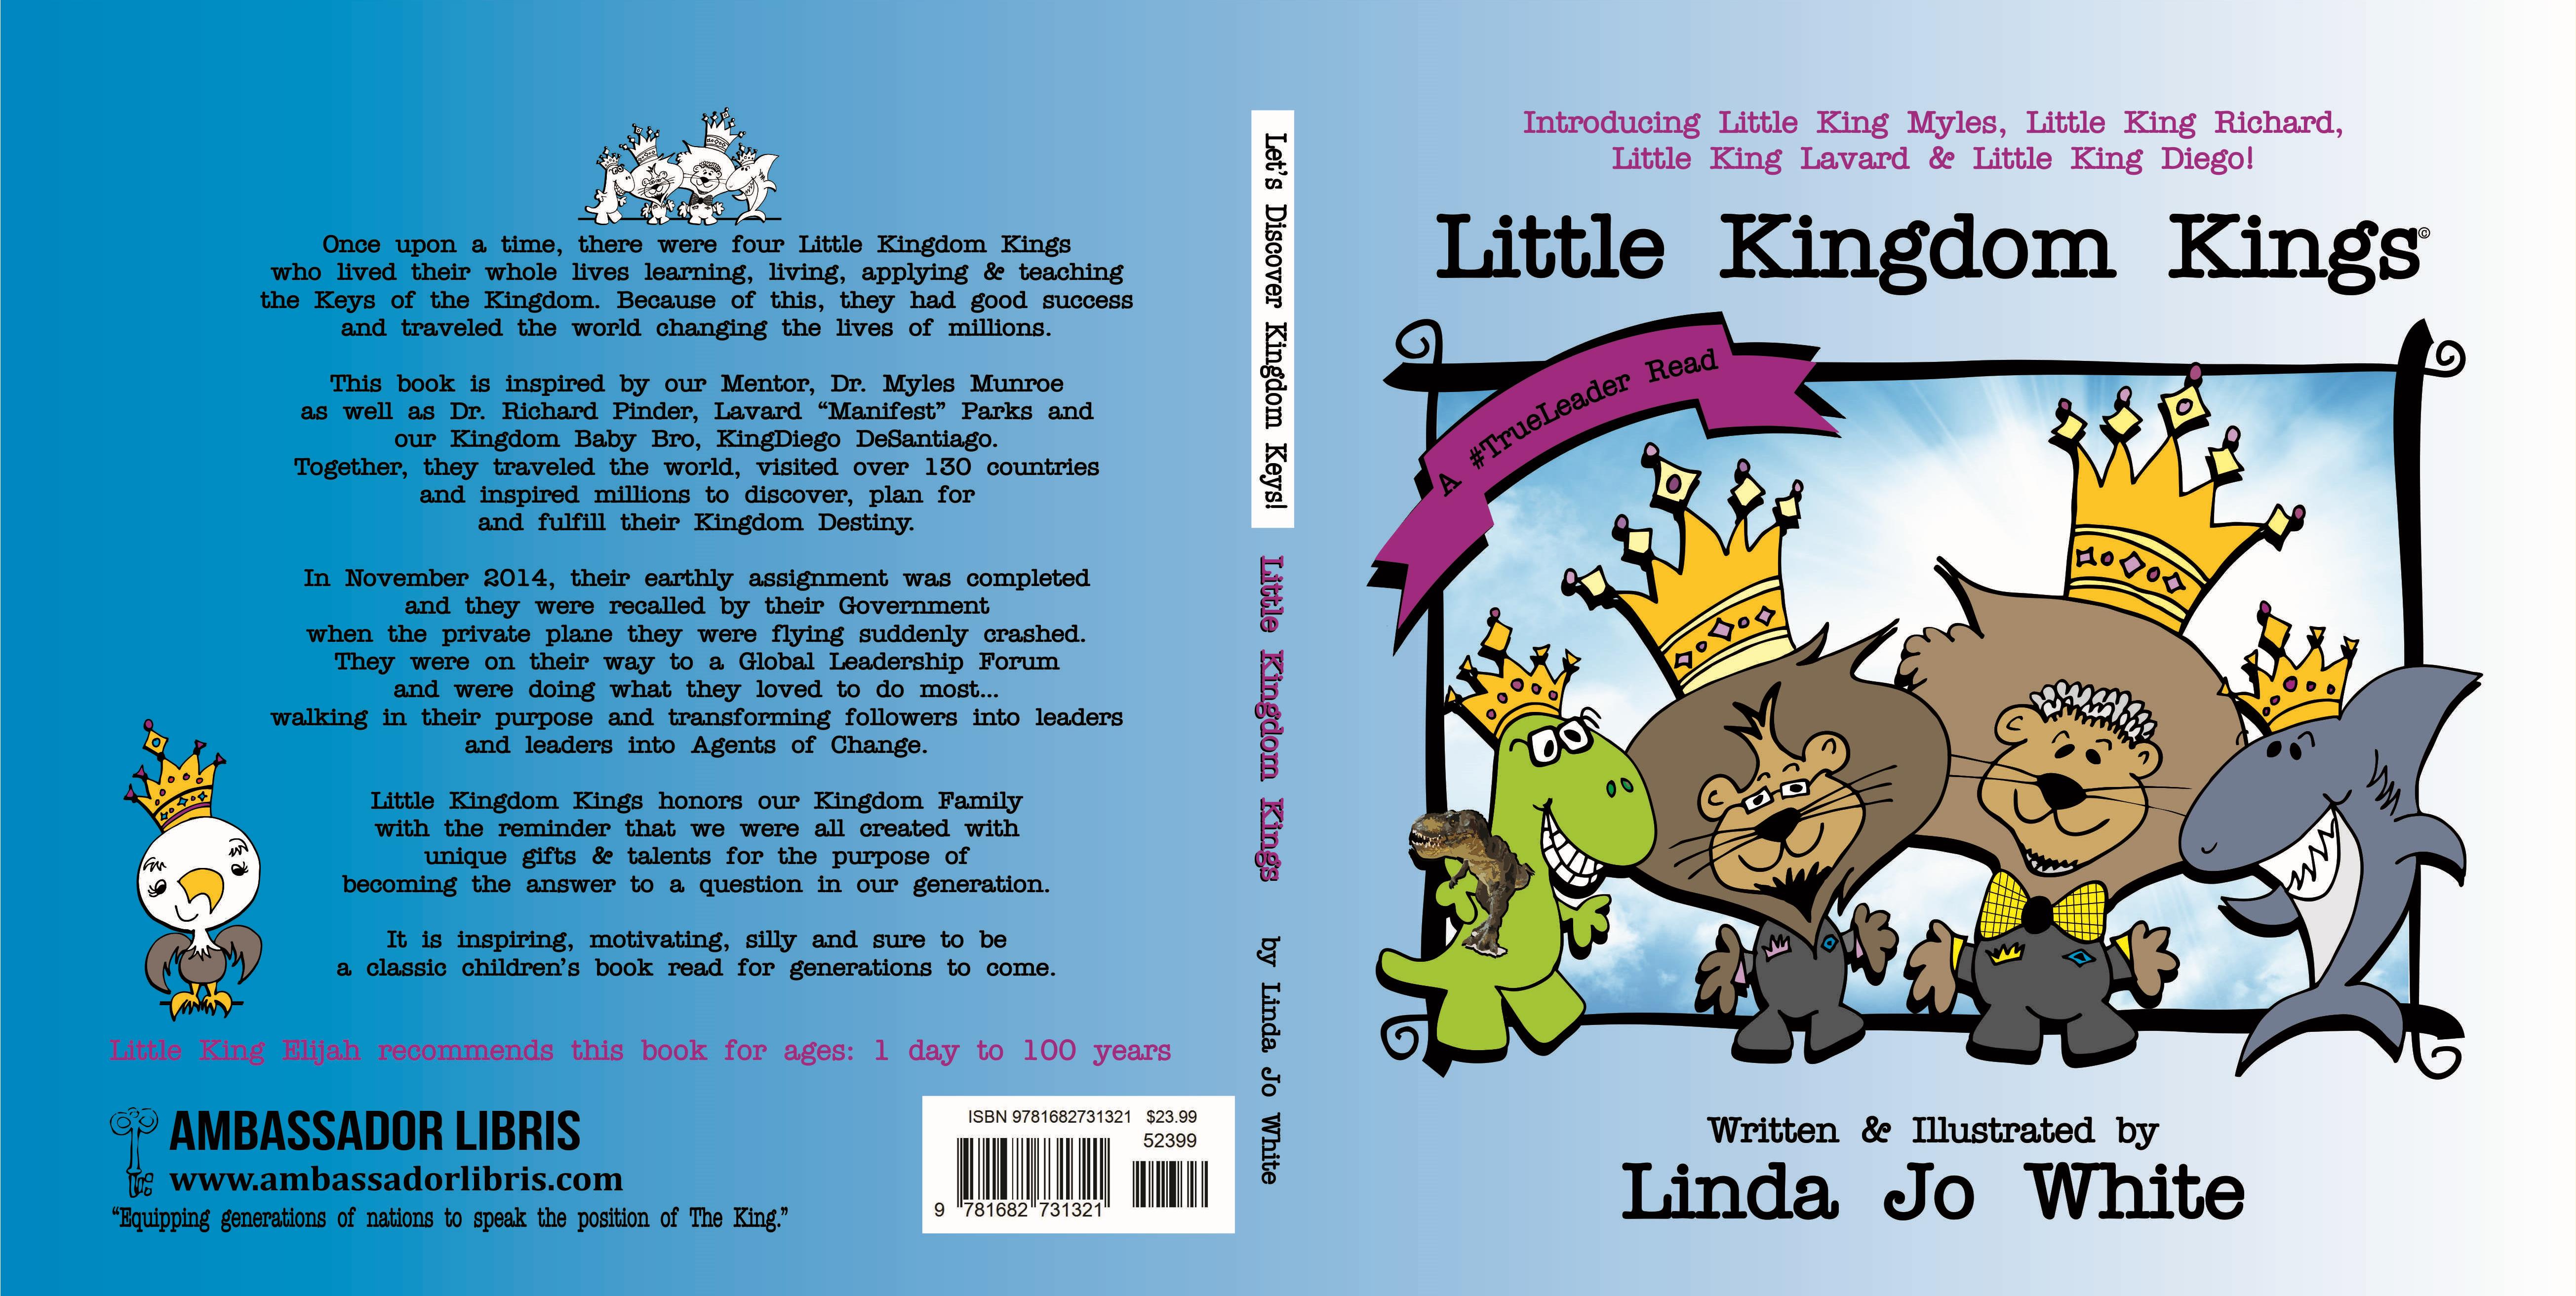 Little Kingdom Kings cover image